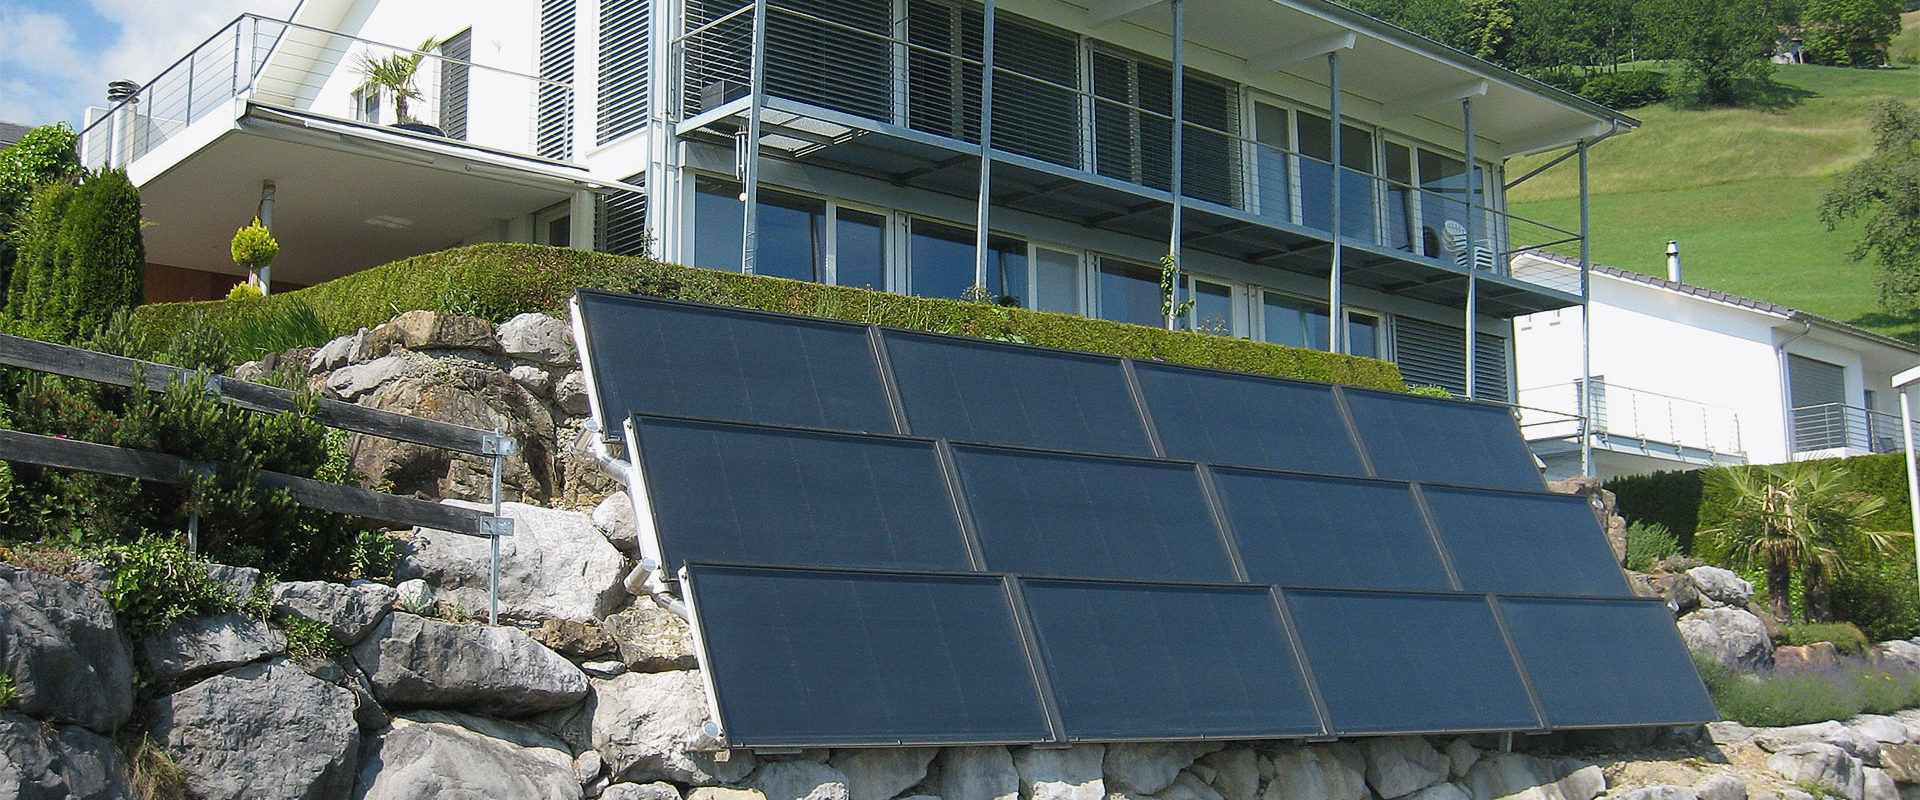 Solar-Wärmekollektoren im Gelände